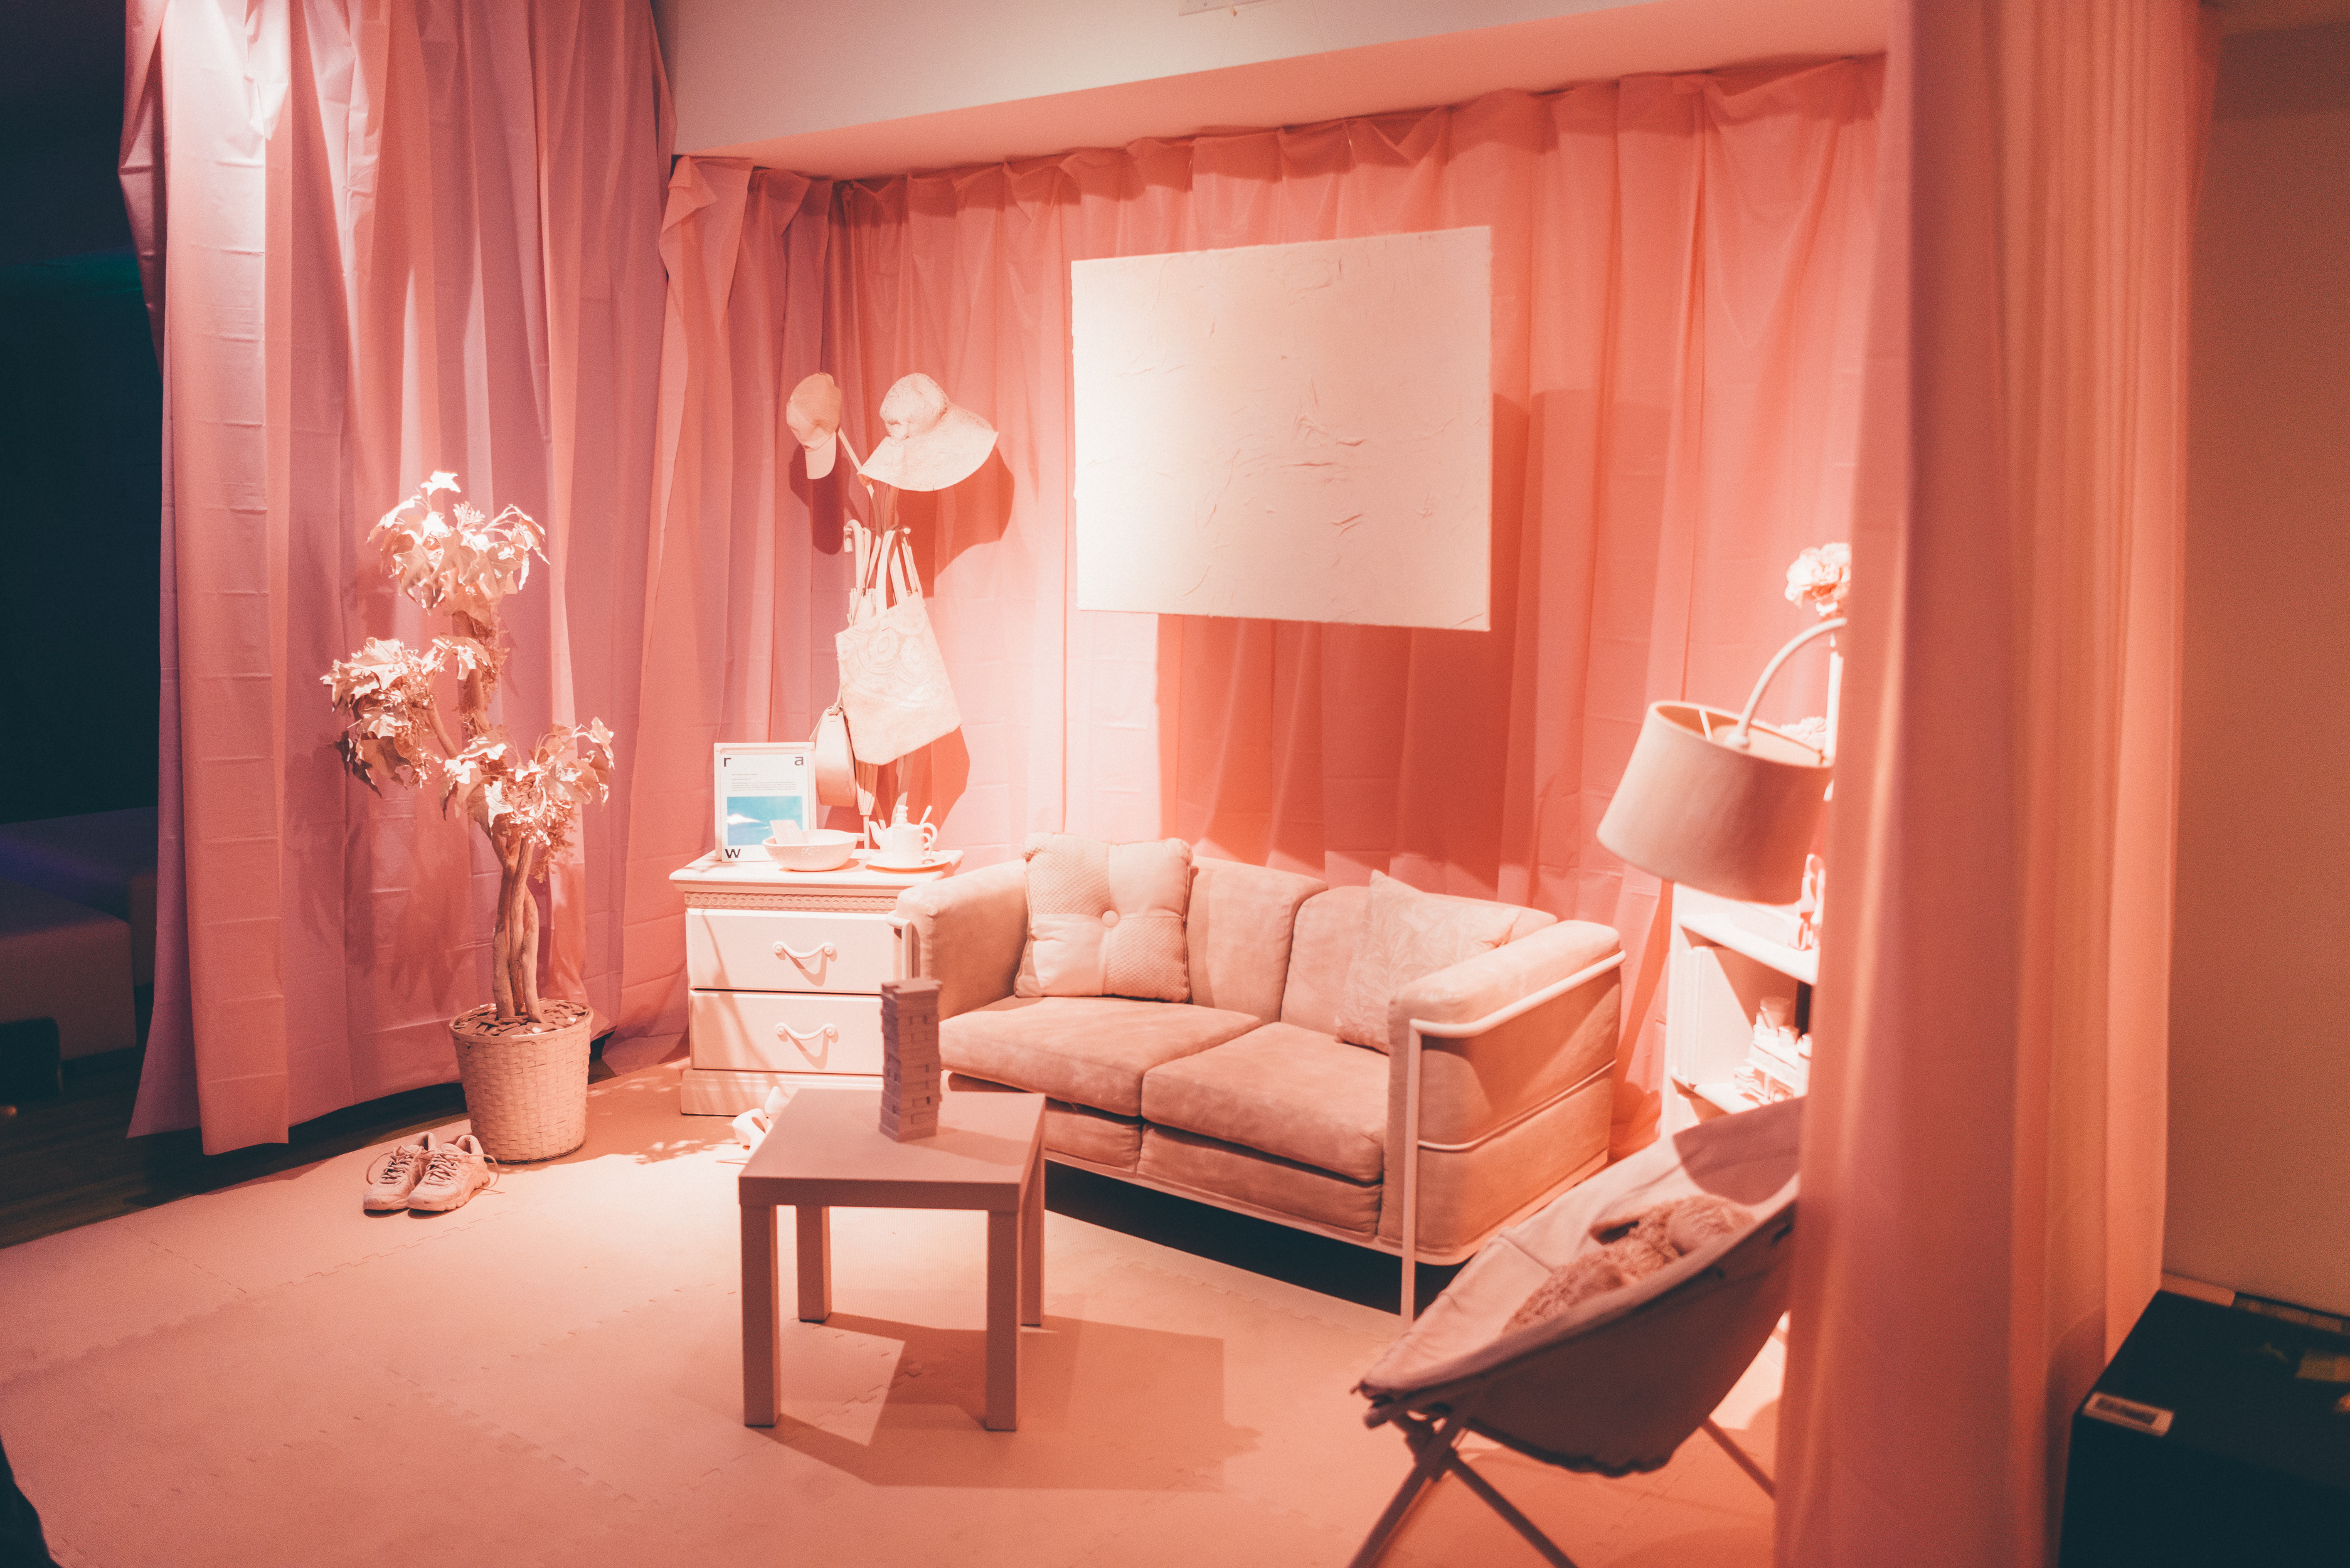 Gianna DiBartolomeo's Monochrome Room